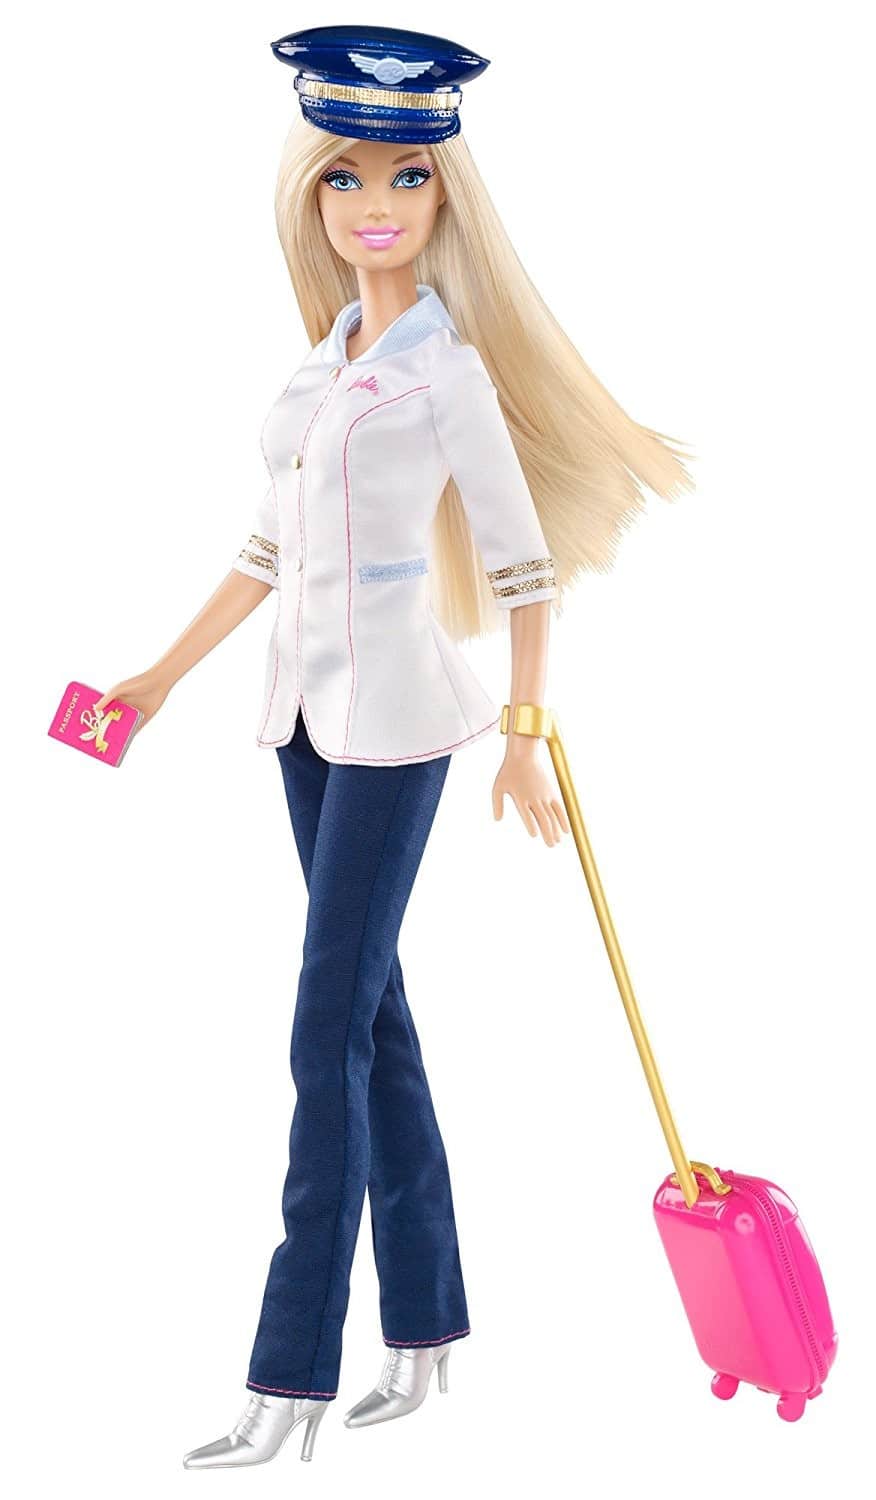 Barbie - Careers Pilot Doll